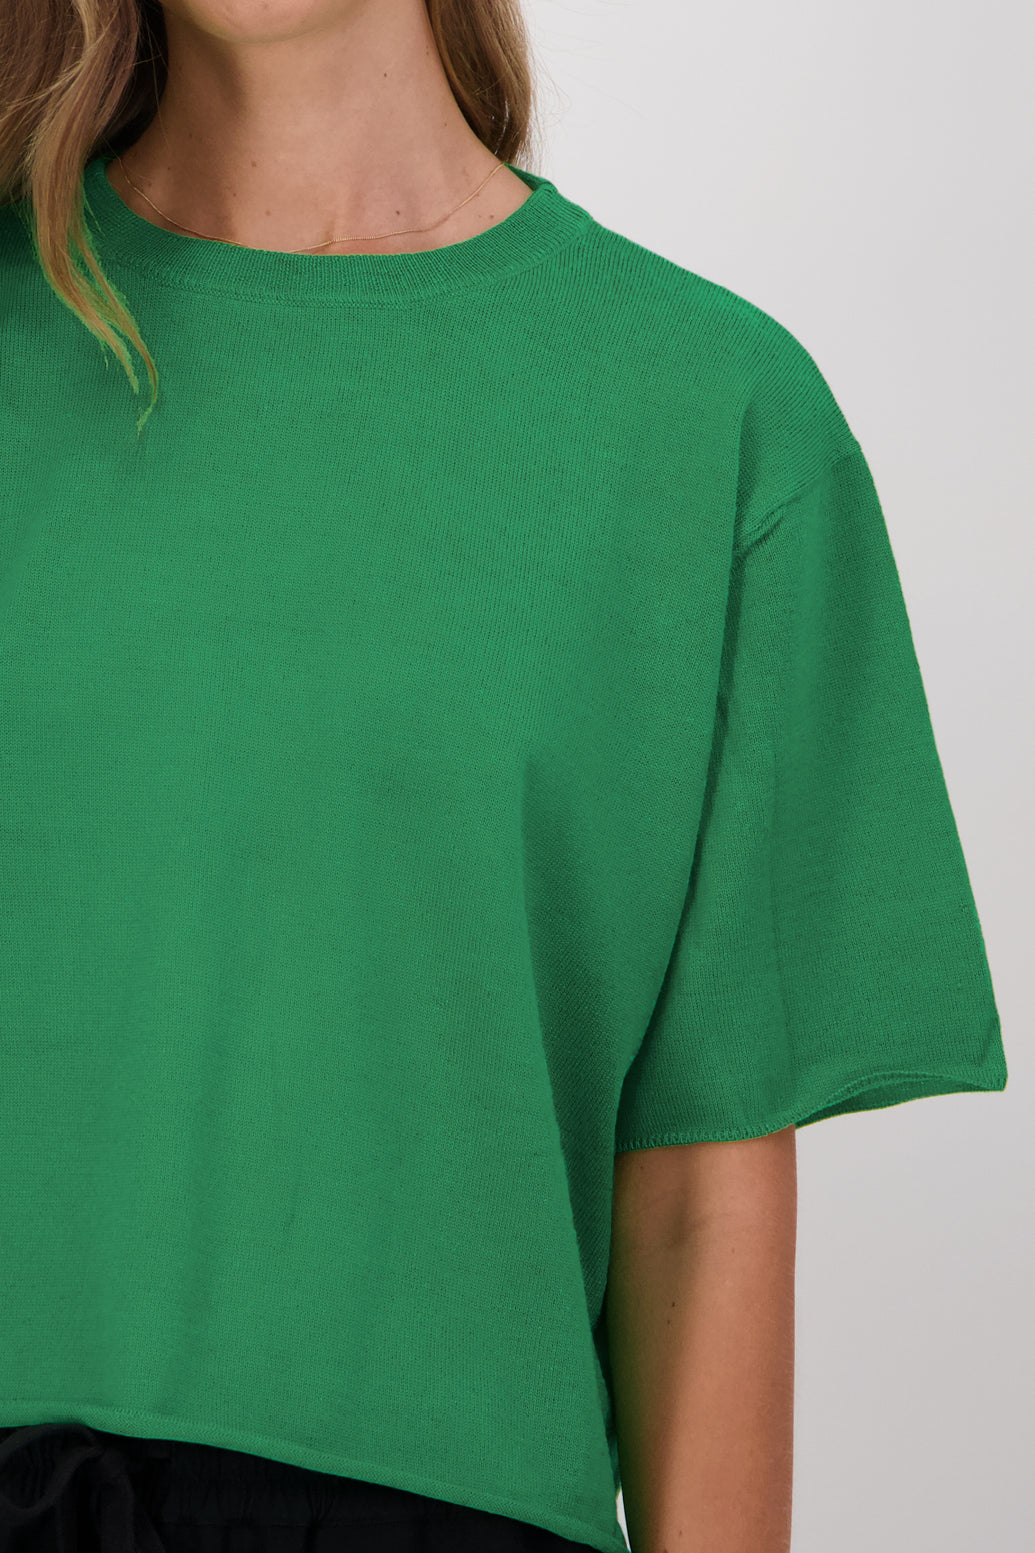 Danielle 100% Wool Short Sleeve Top/TShirt  - Apple